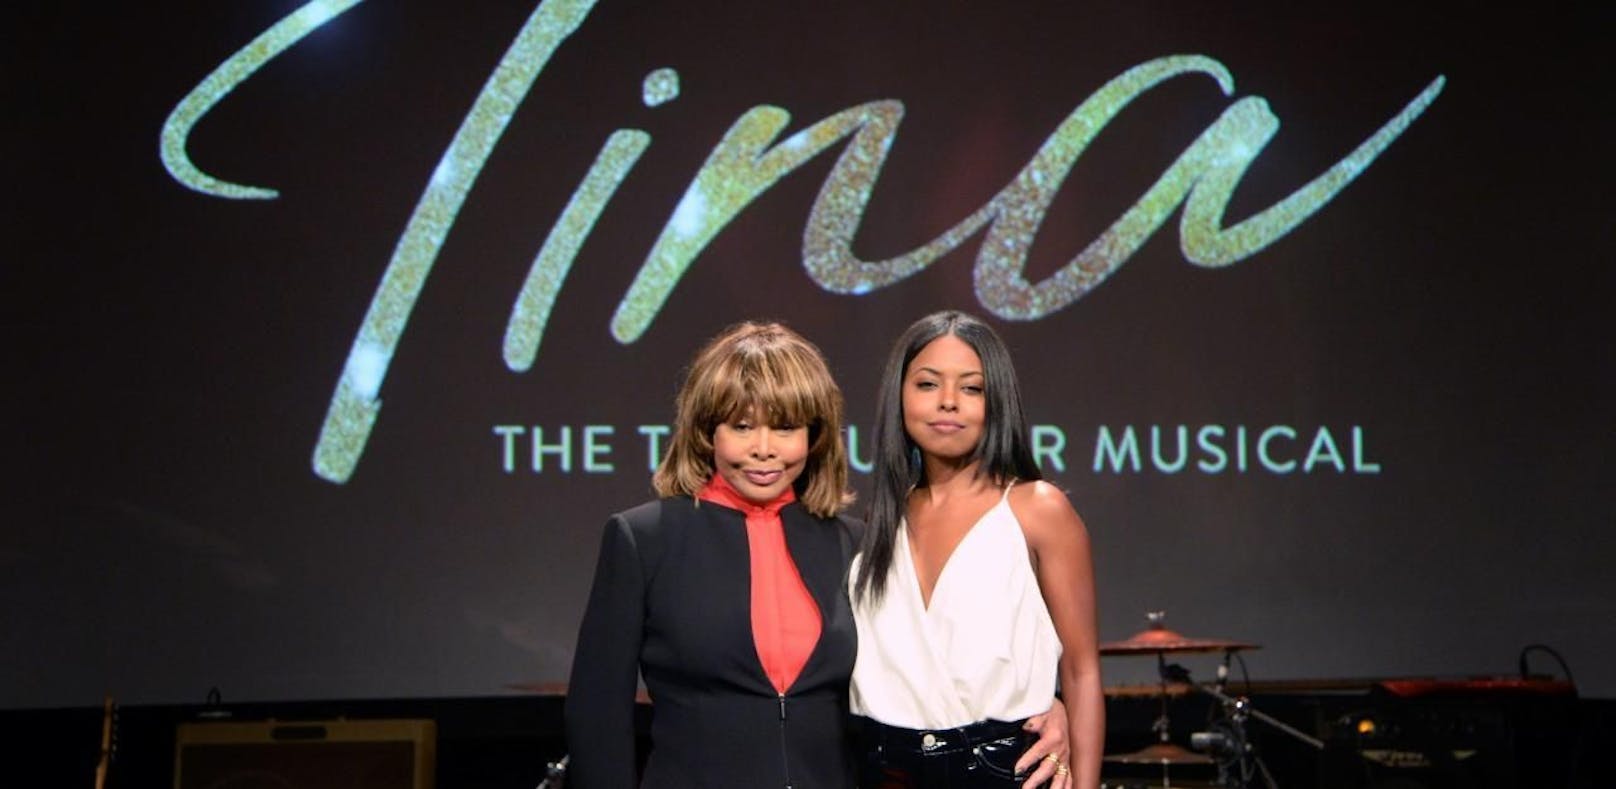 Tina Turner präsentiert in London ihr Musical "Tina"